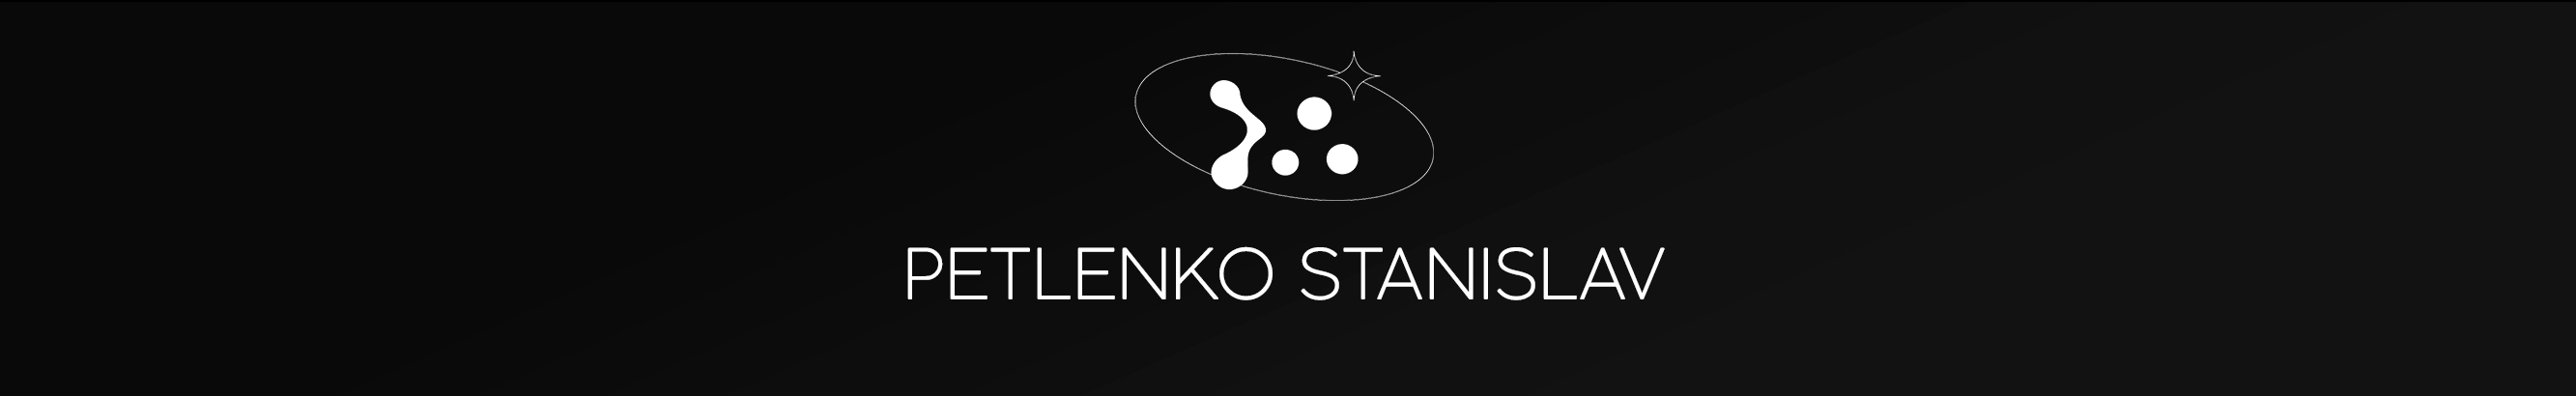 Stanislav Petlenko's profile banner